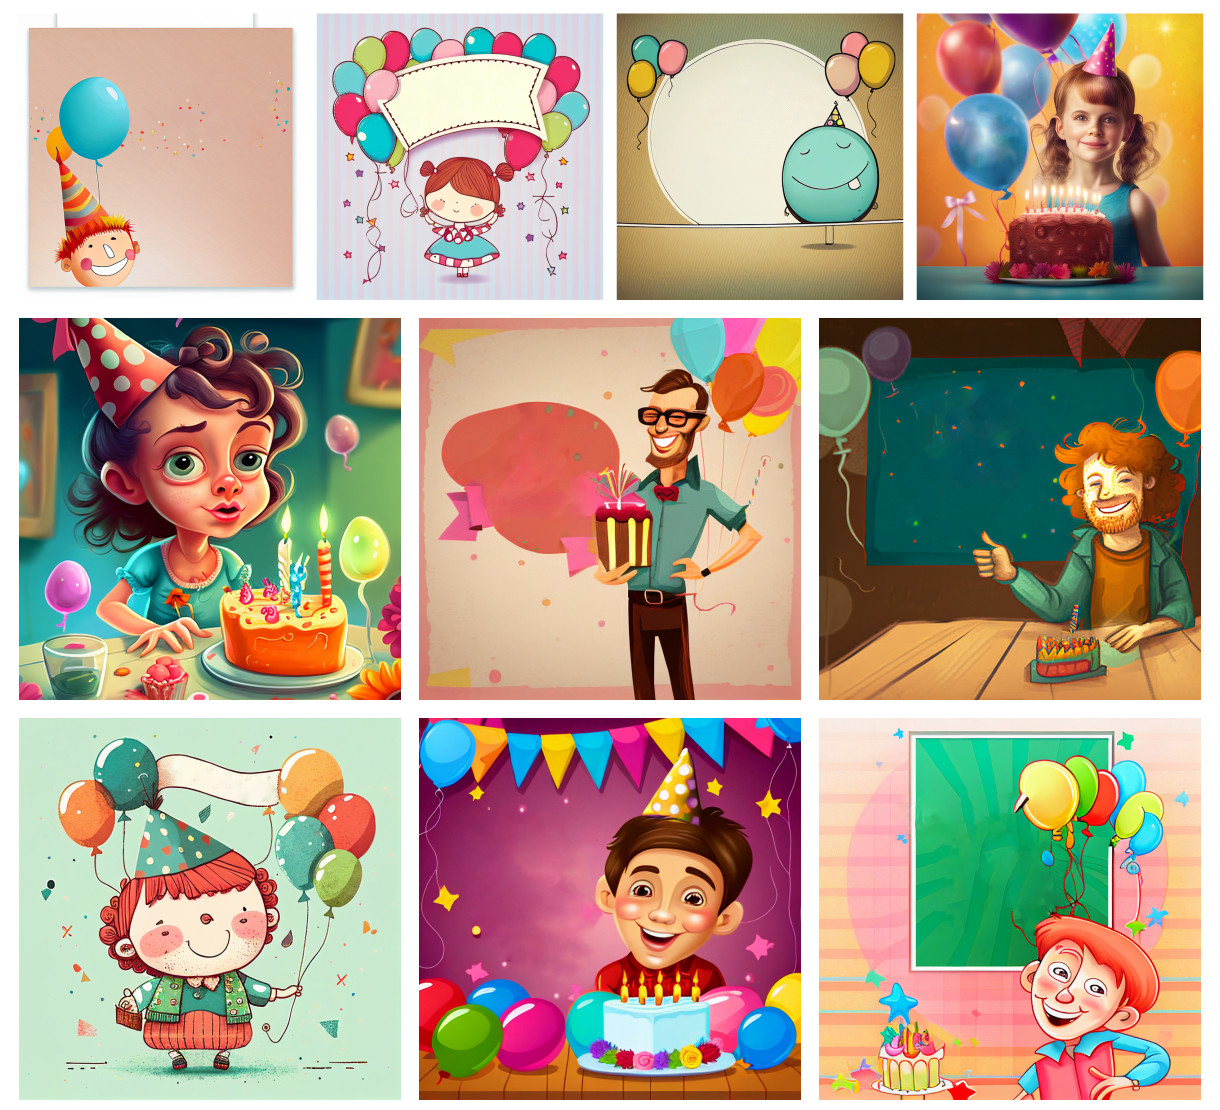 Joyful Illustrations: Cartoon Birthday Backgrounds with Characters